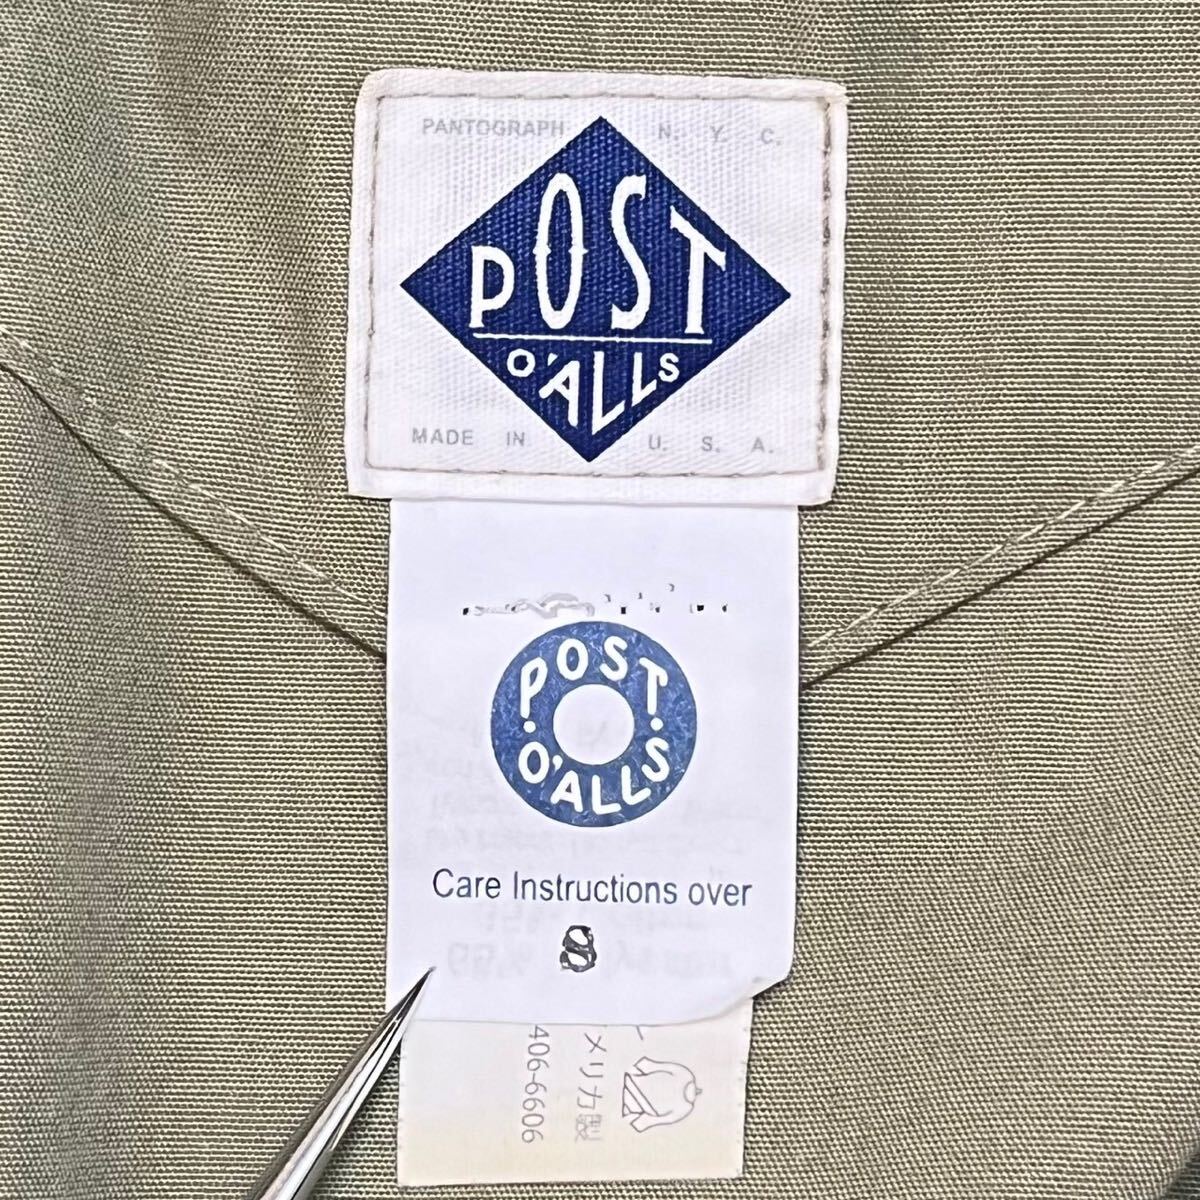 [99] beautiful goods post o\'alls overalls Cruiser Parker jacket S Post Overalls CRUZER PARKA khaki olive 